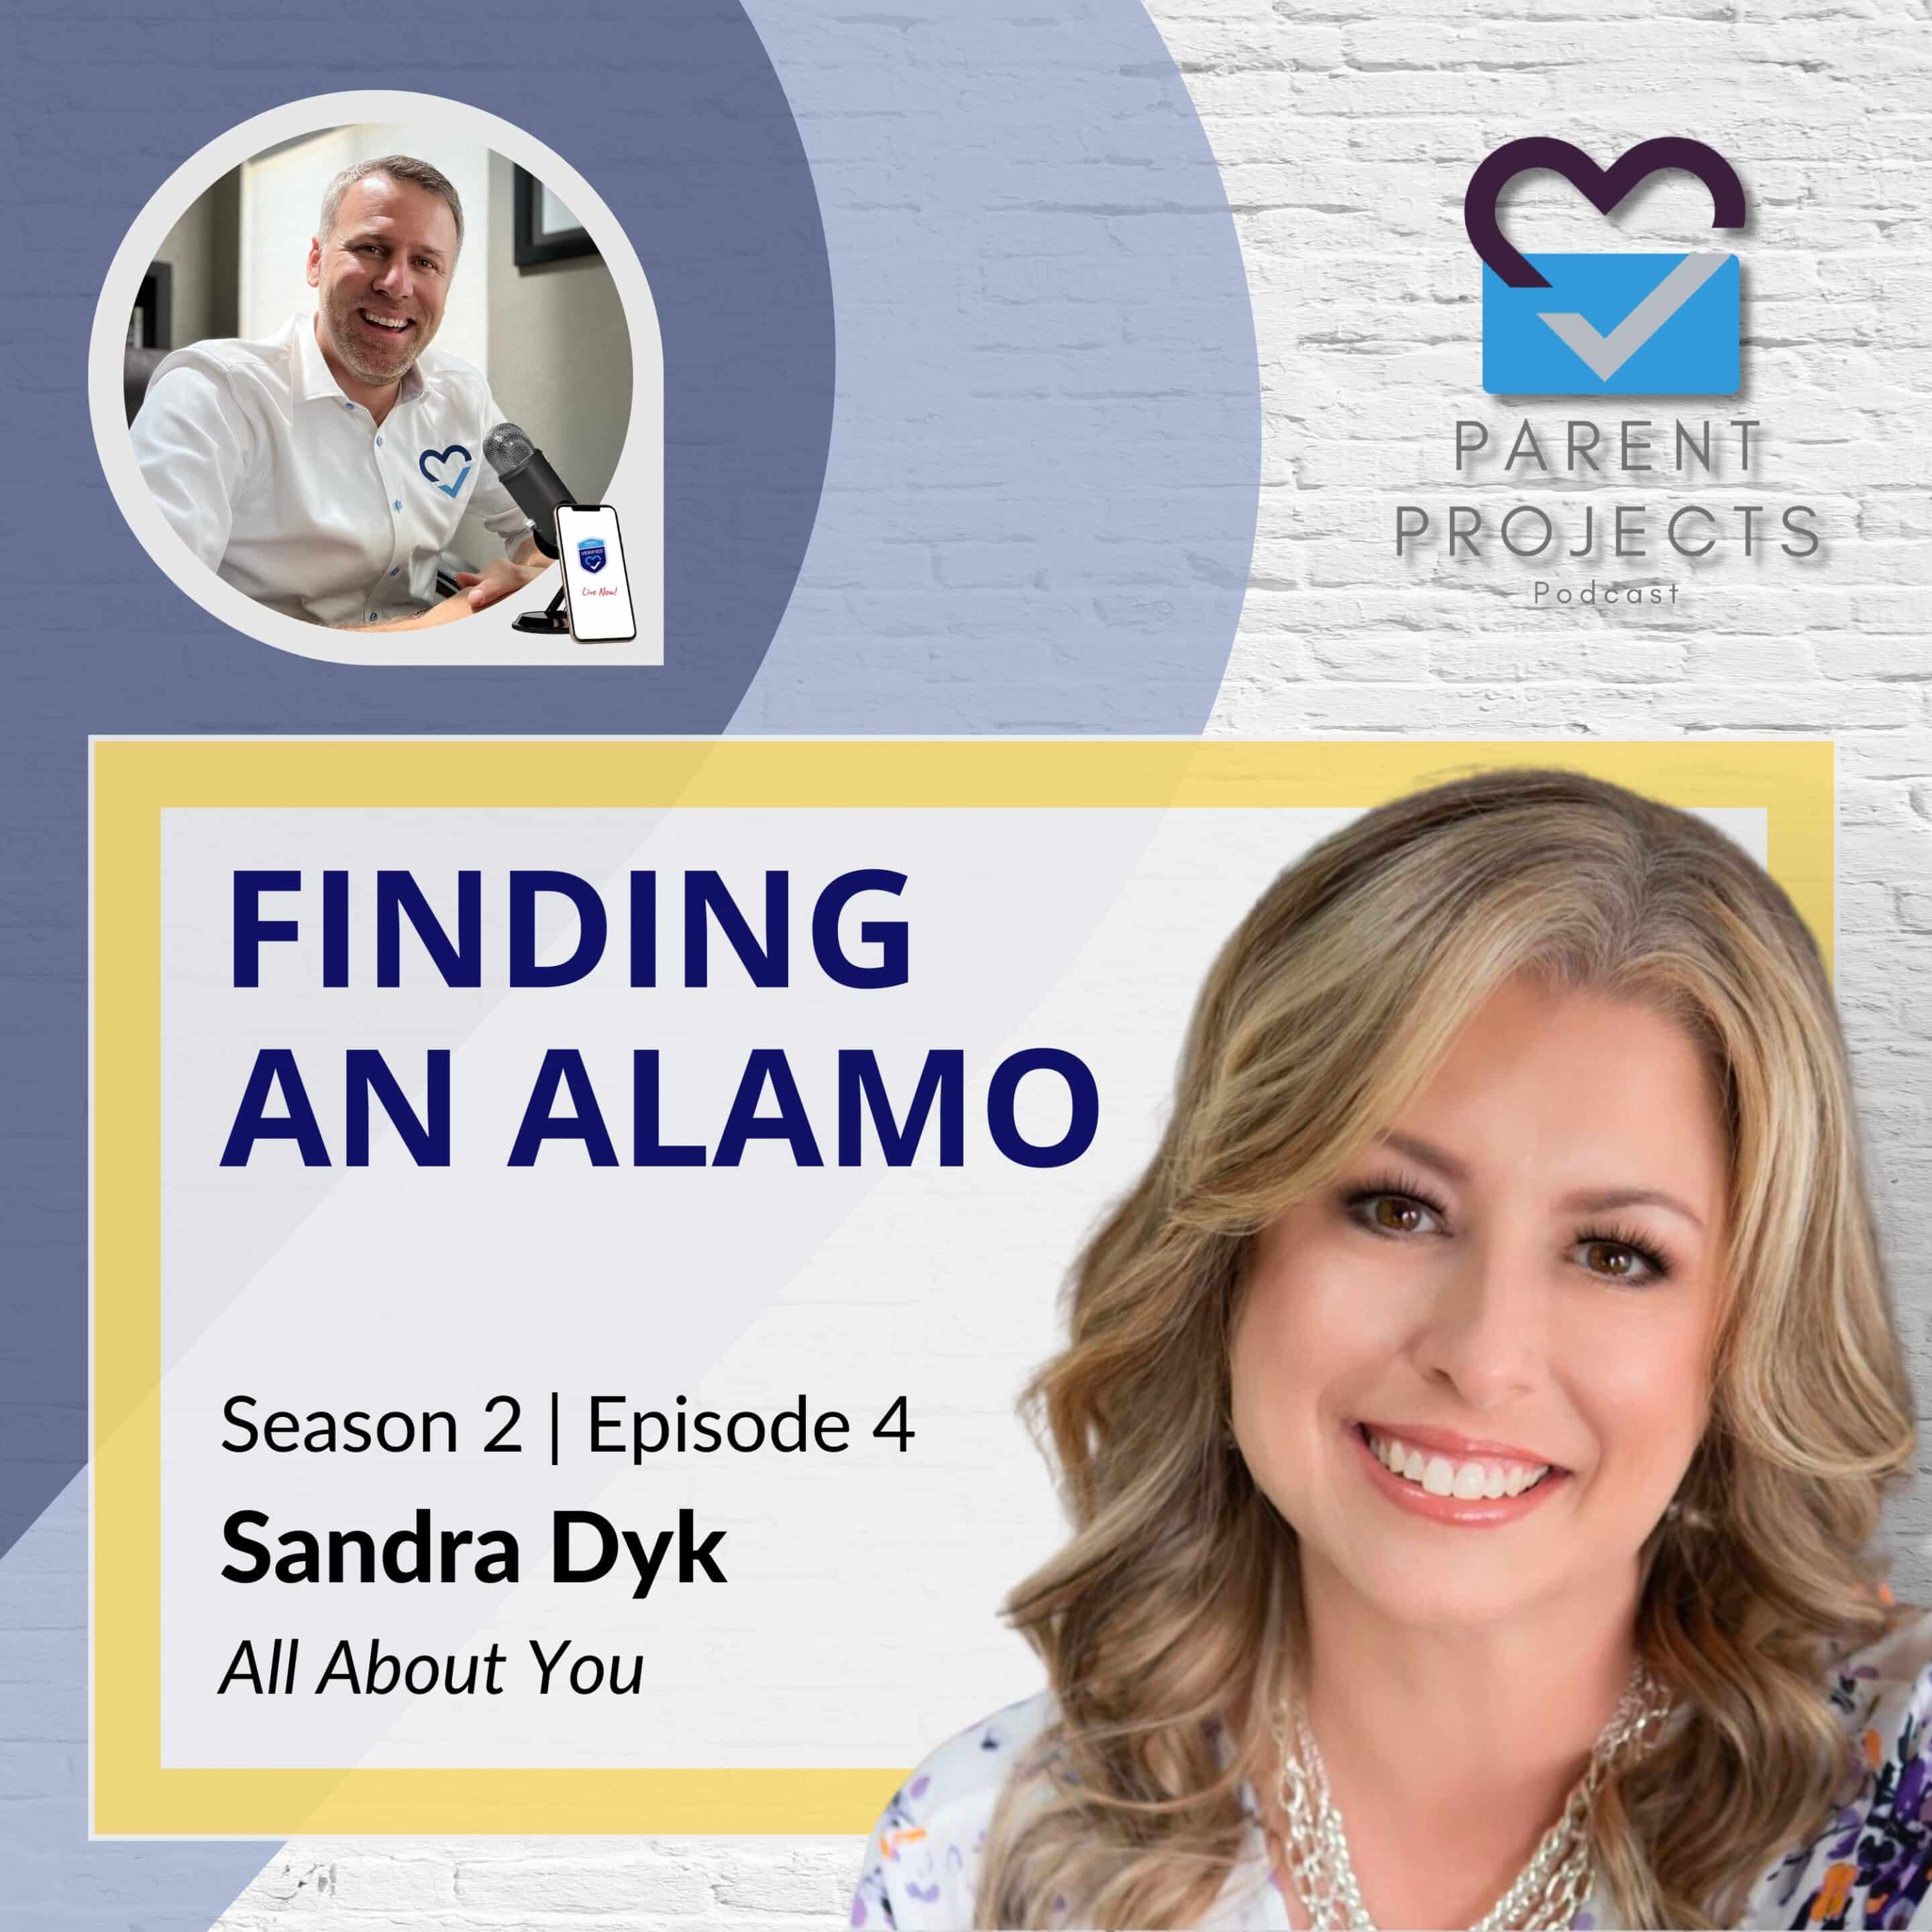 S2:E4 Sandra Dyk - Finding an Alamo